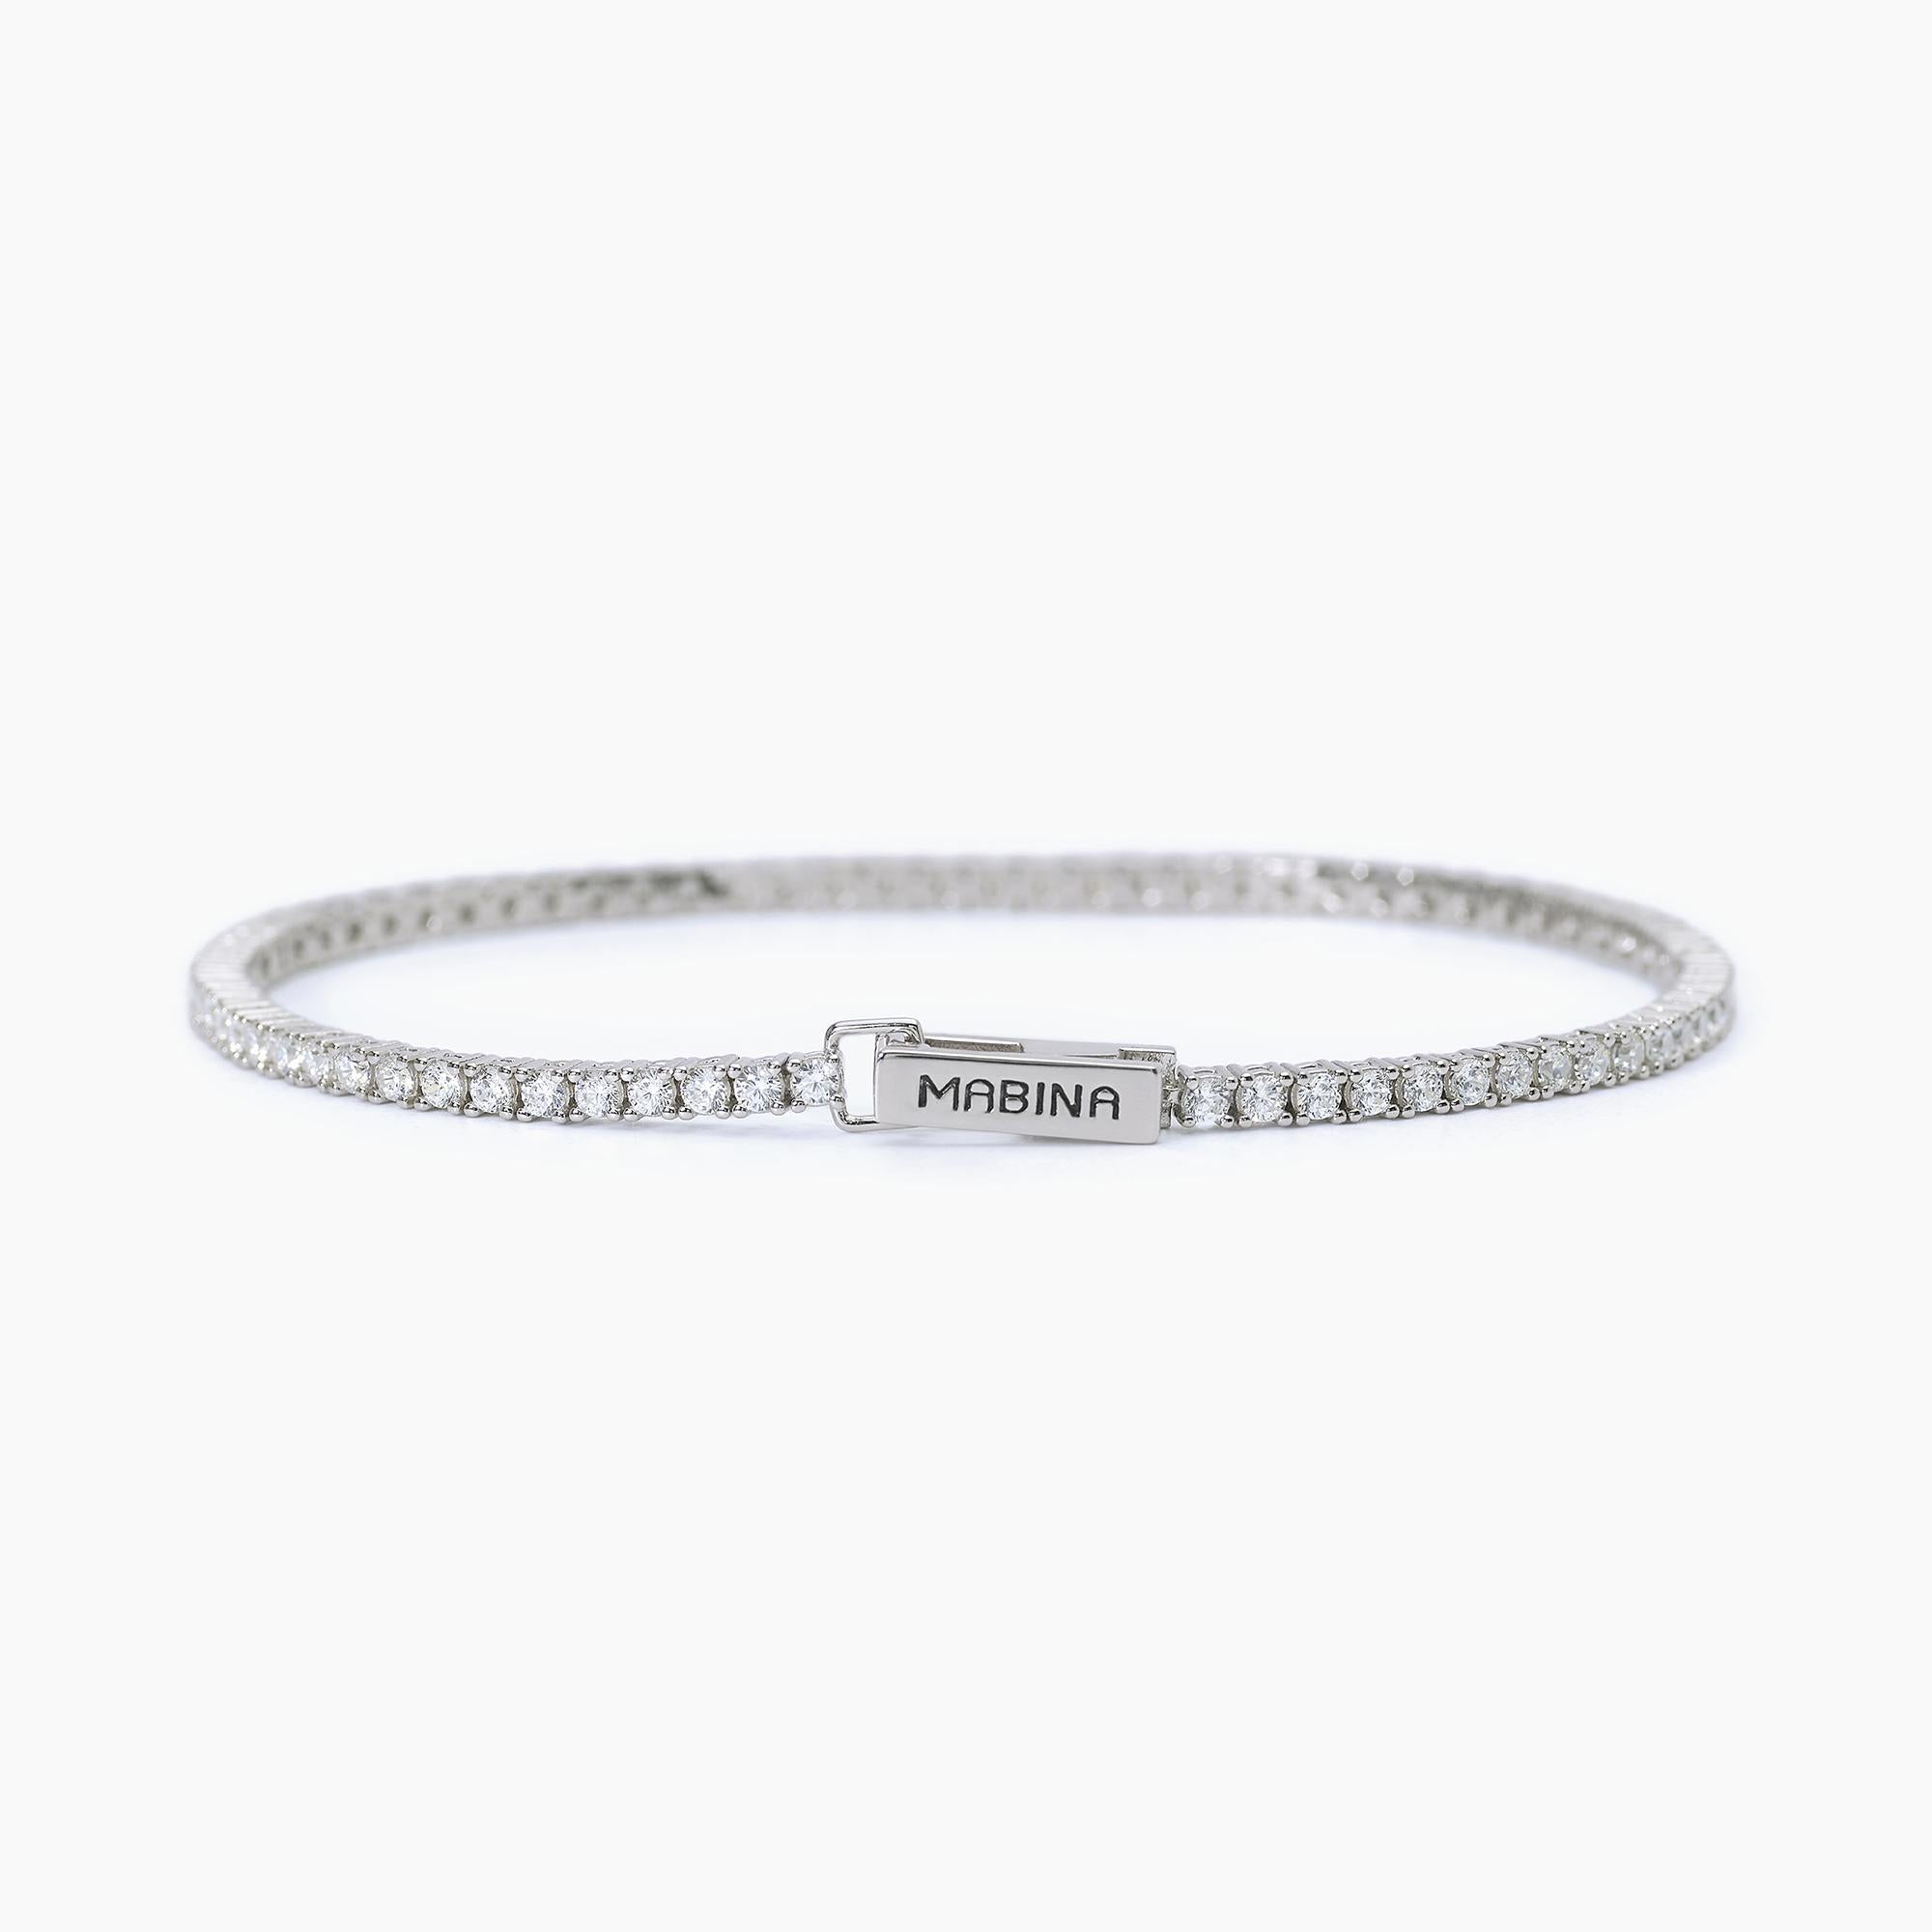 Mabina Uomo - Men's tennis bracelet with white crystals TENNIS CLUB - 533712-S